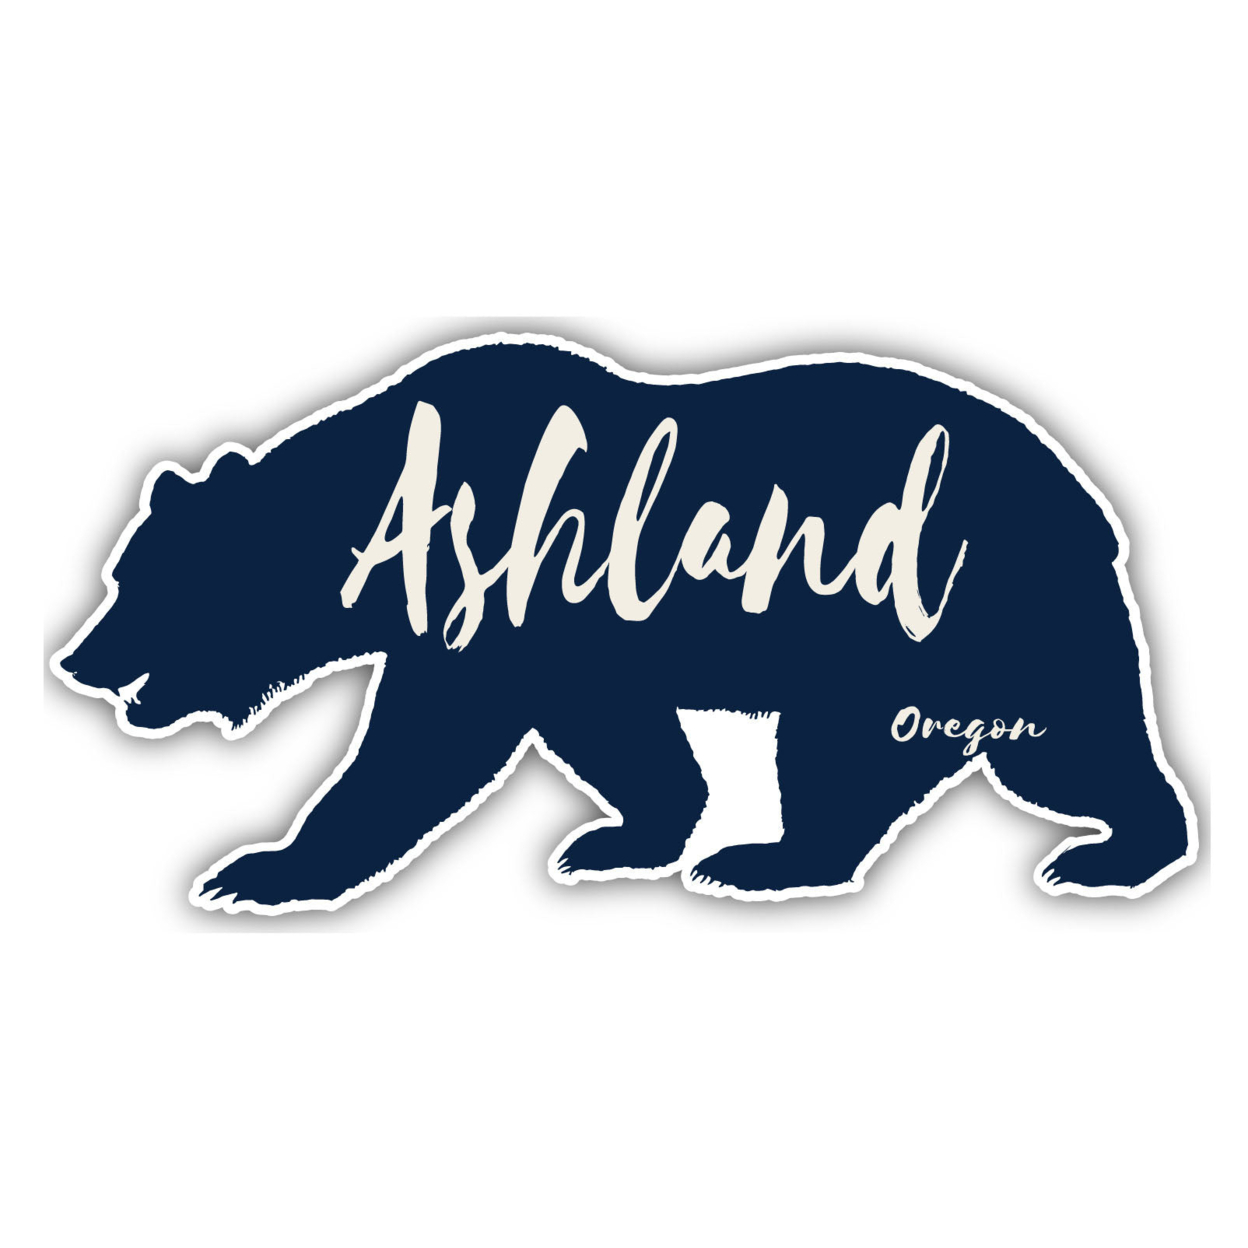 Ashland Oregon Souvenir Decorative Stickers (Choose Theme And Size) - Single Unit, 4-Inch, Tent